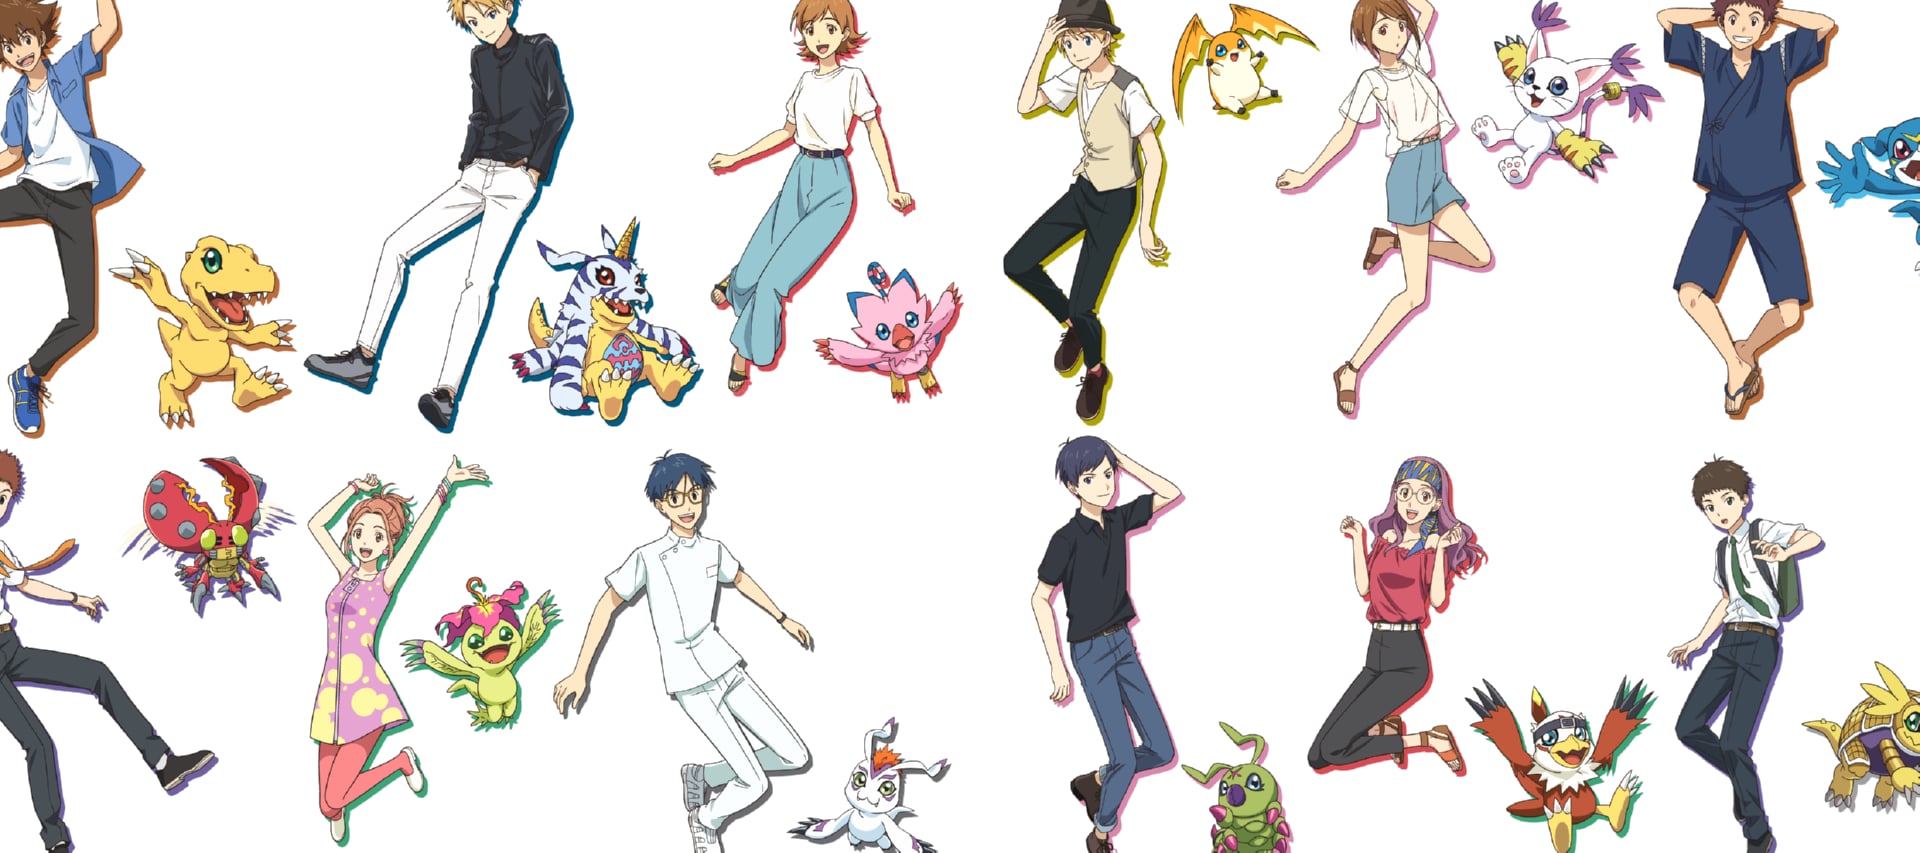 Digimon Adventure Last Evolution Kizuna at 320 x 480 iPhone size wallpapers HD quality